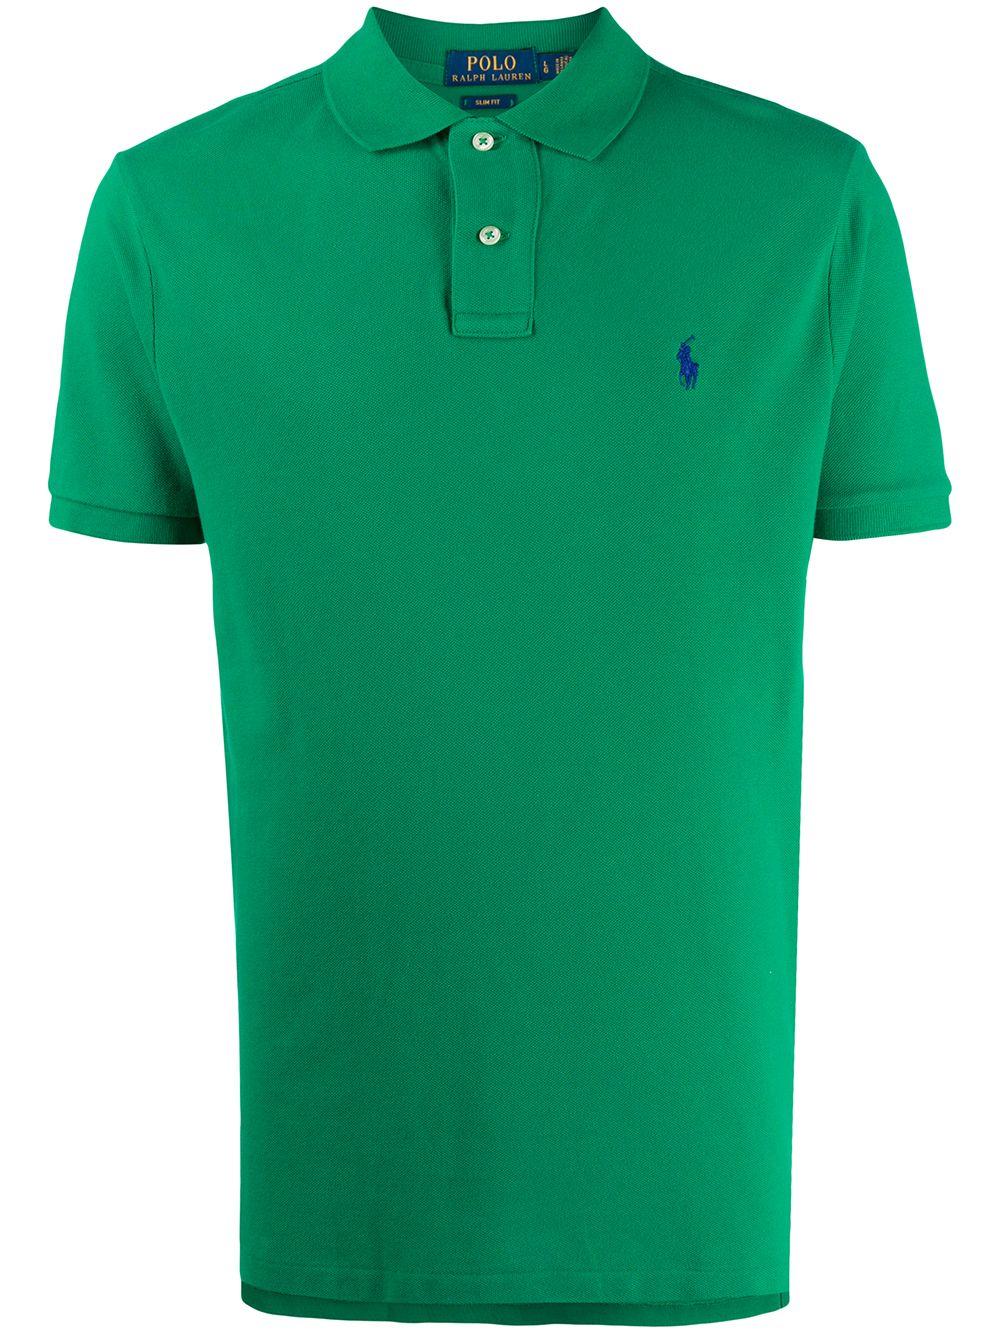 Polo Ralph Lauren Cotton Big Pony Logo Polo Shirt in Green for Men - Lyst